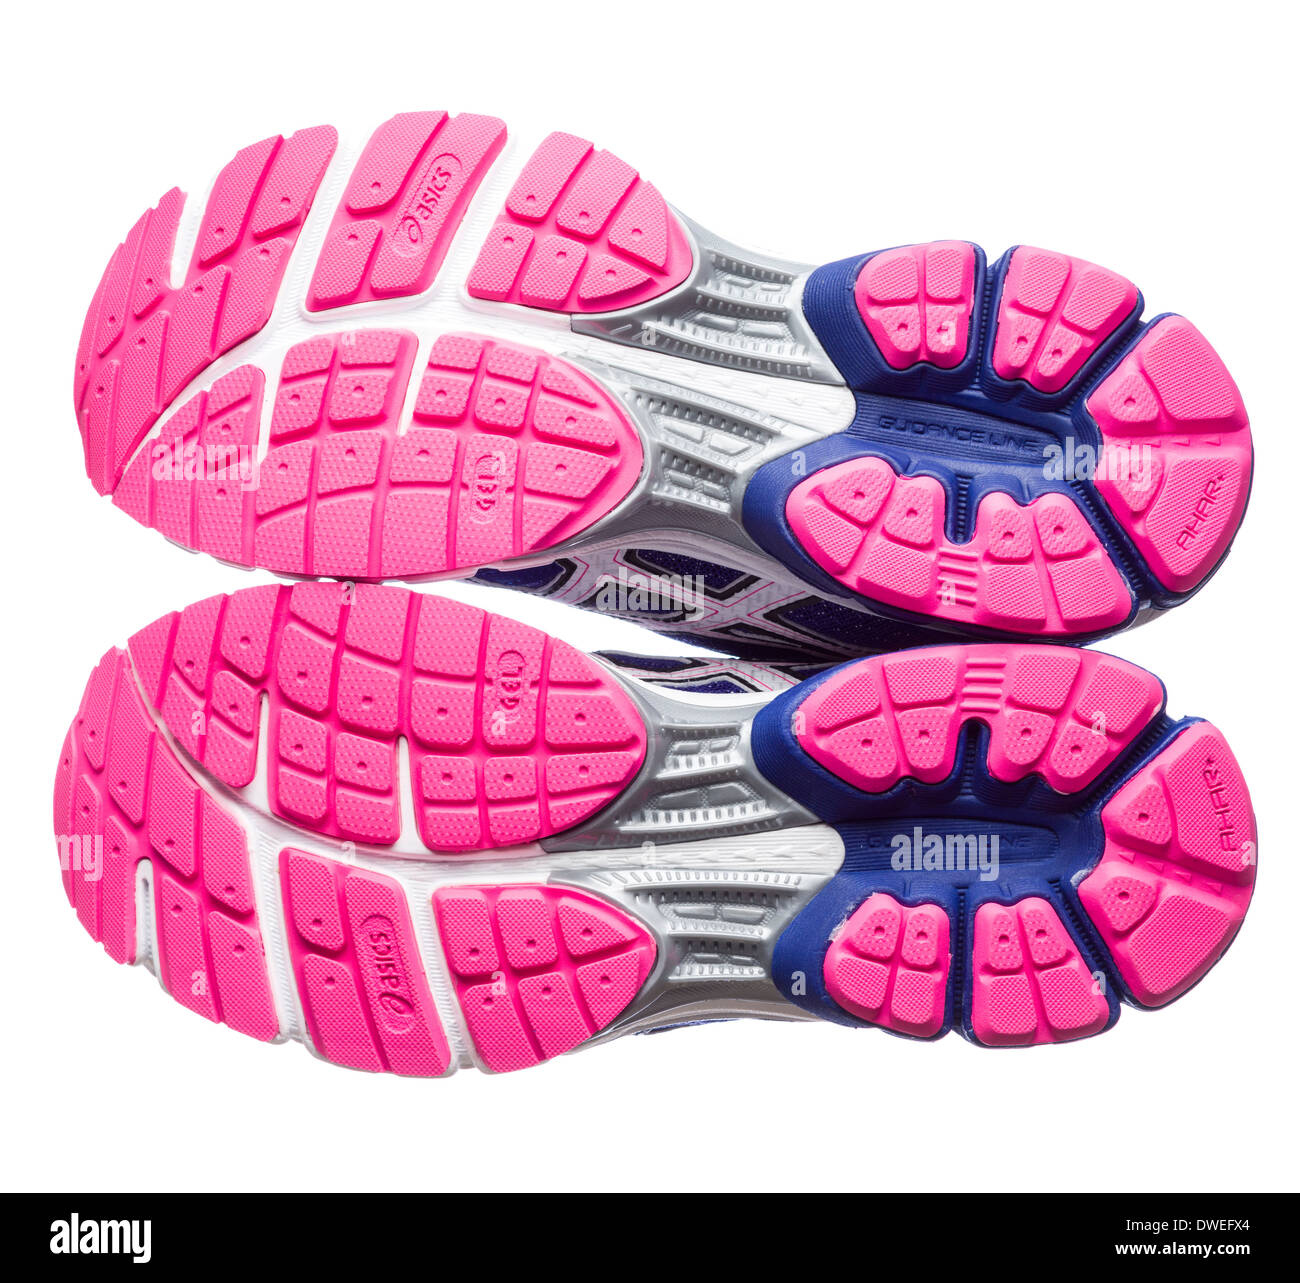 Blu e rosa Asics Gel Pulse 5 scarpe running Foto Stock